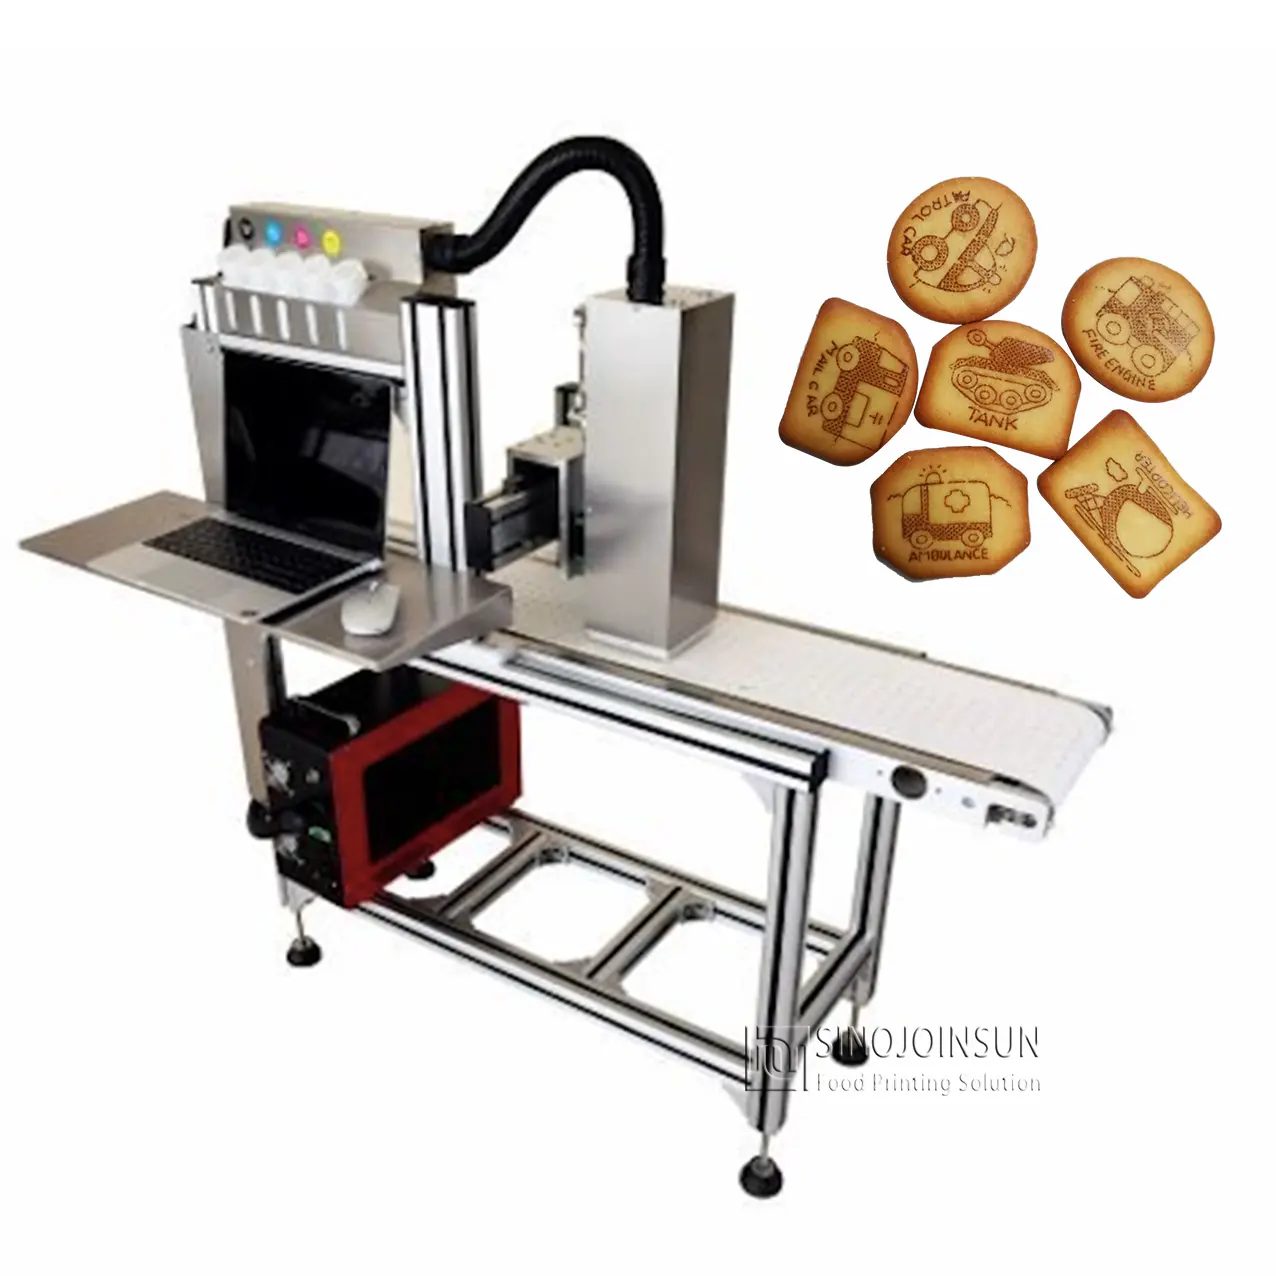 Bakery factory equipment online industrial food 3d printer